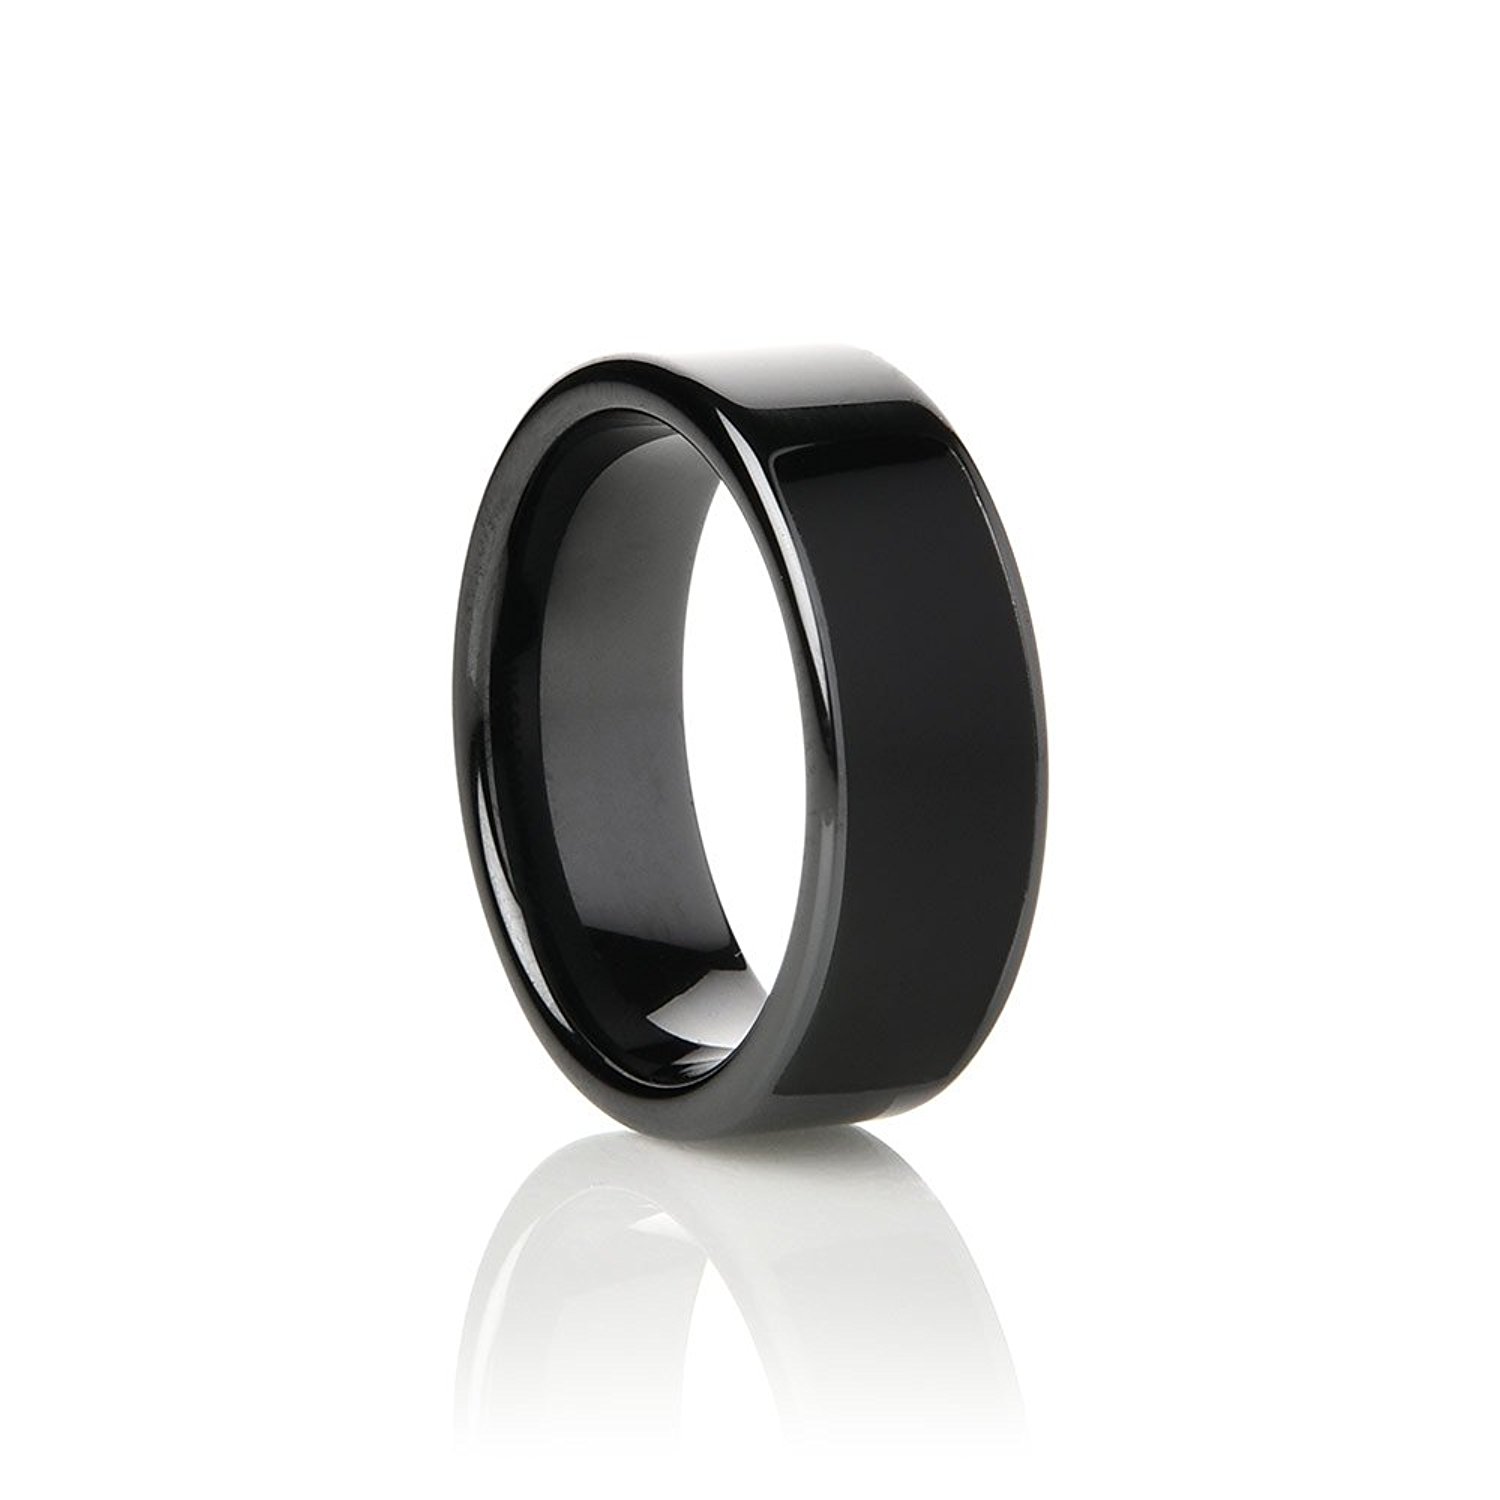 Amazon.com: Ceramic Eclipse NFC Ring - The Original Programmable ...